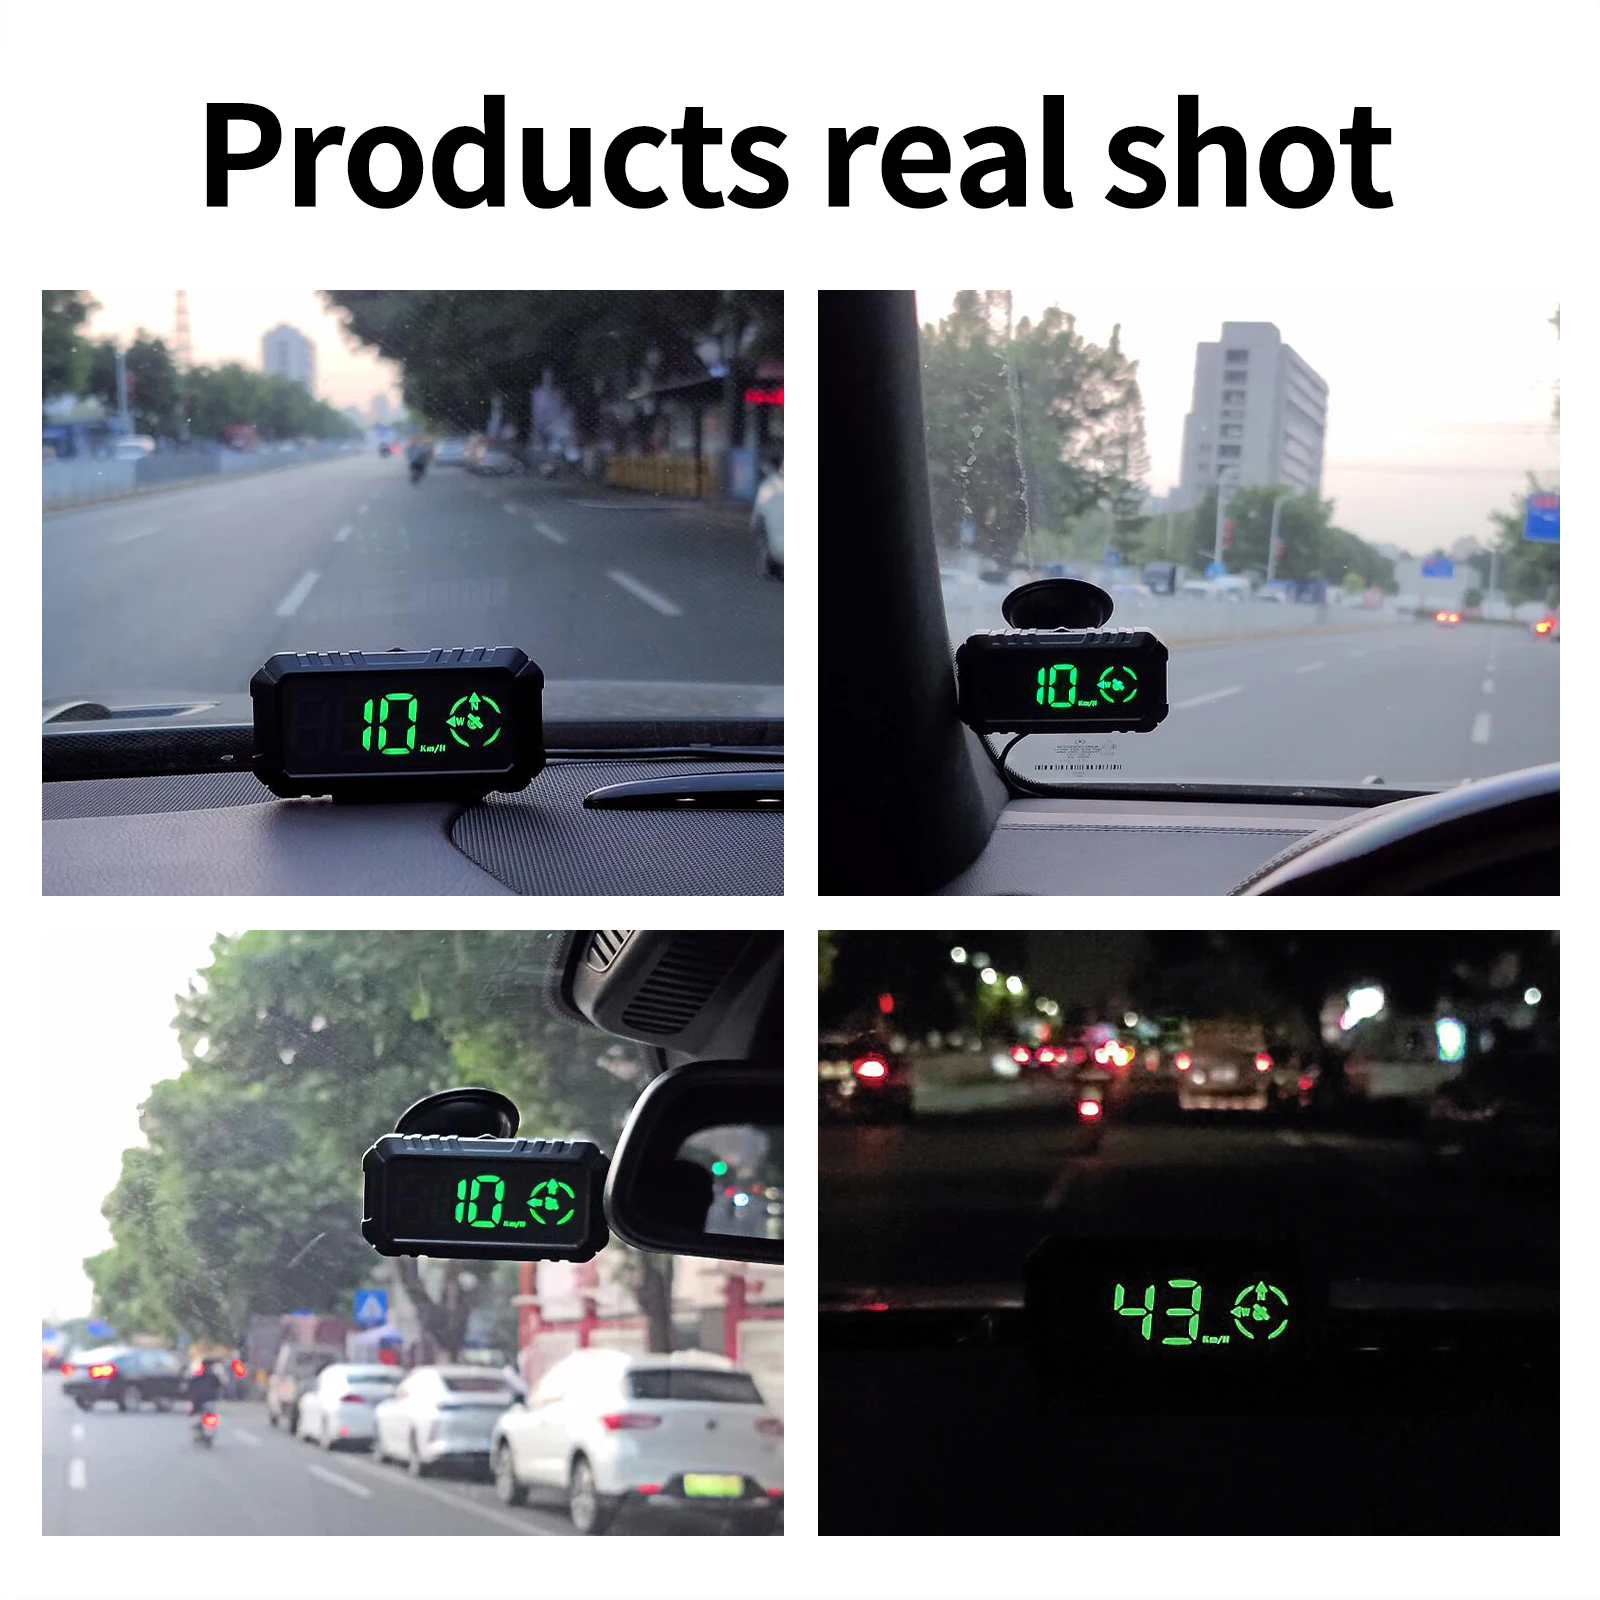 HD G7 GPS מד מהירות מצפן Head-Up Display מטר האד מהירות הנסיעה כיוון נהיגה מעל למהירות אזעקה עייפות בנהיגה תזכיר לי - 4